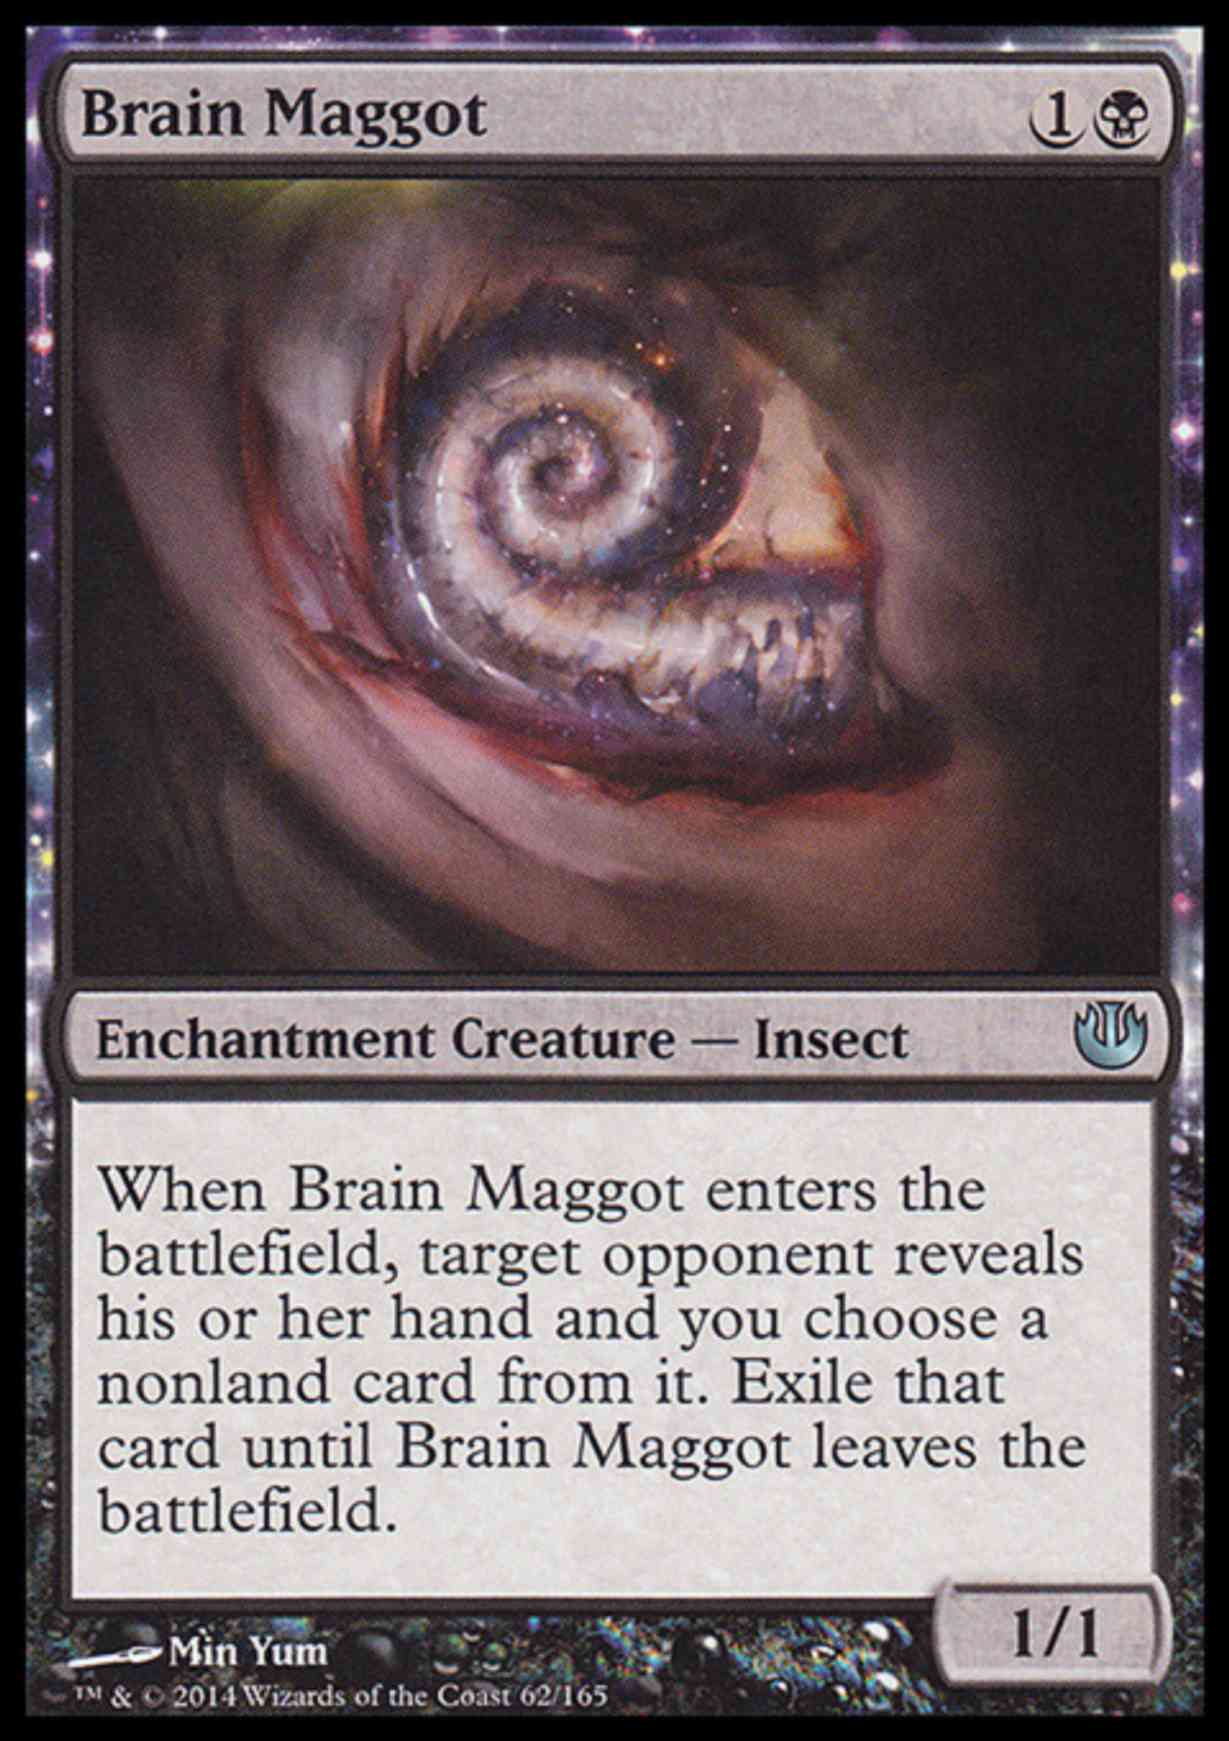 Brain Maggot magic card front